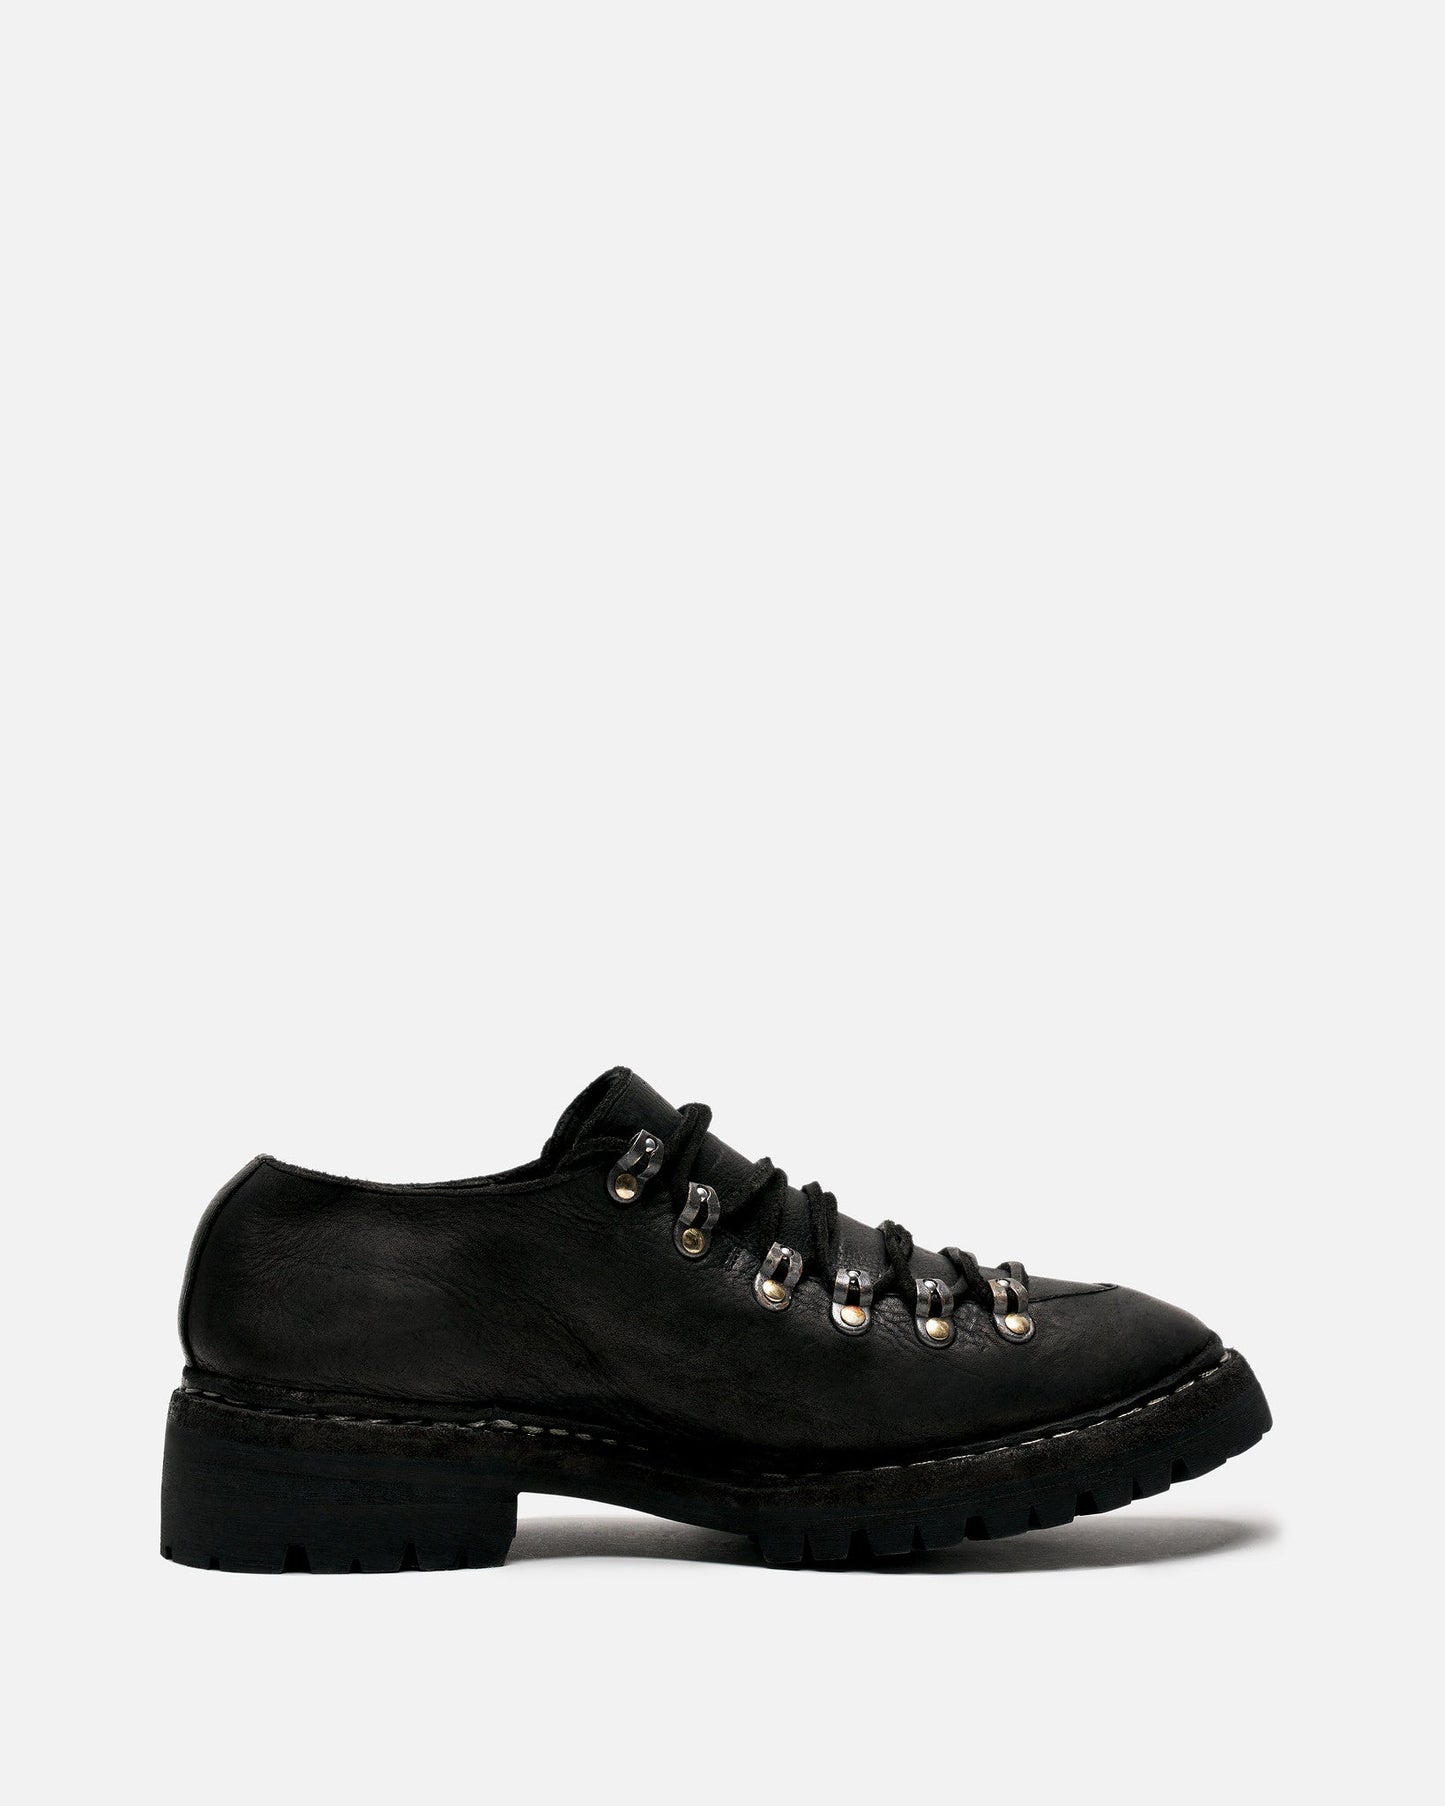 Guidi Men's Boots NTP03 Full Grain Calf Leather Boot in Black